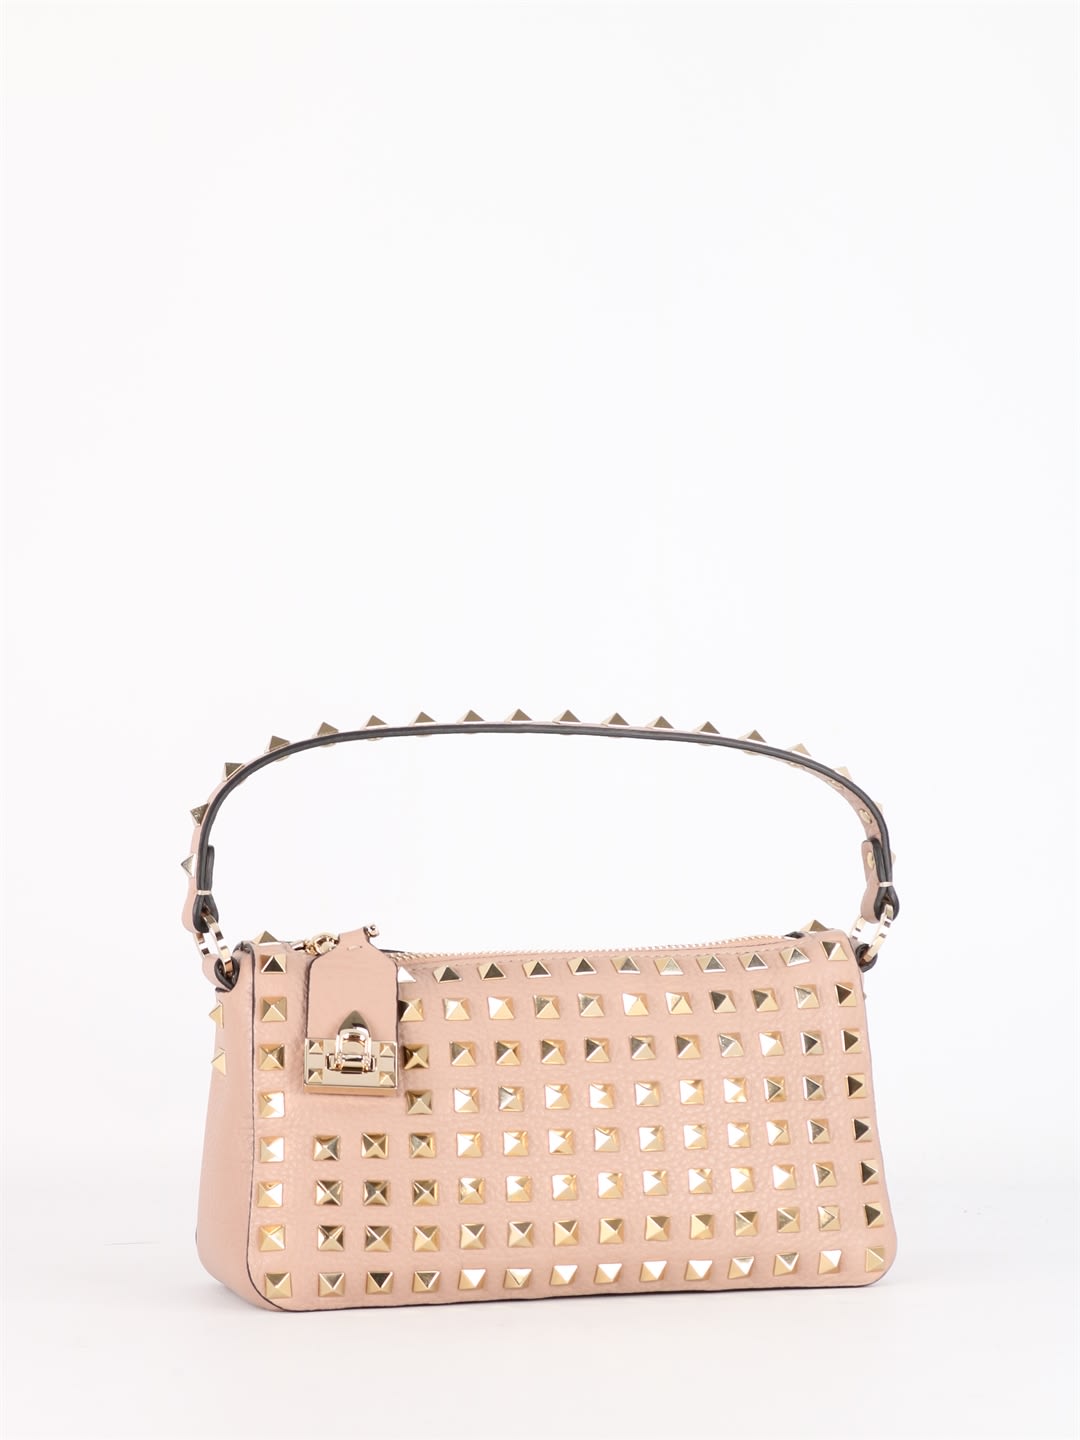 Valentino Garavani Rockstud Small Bag In Antique Pink Studs